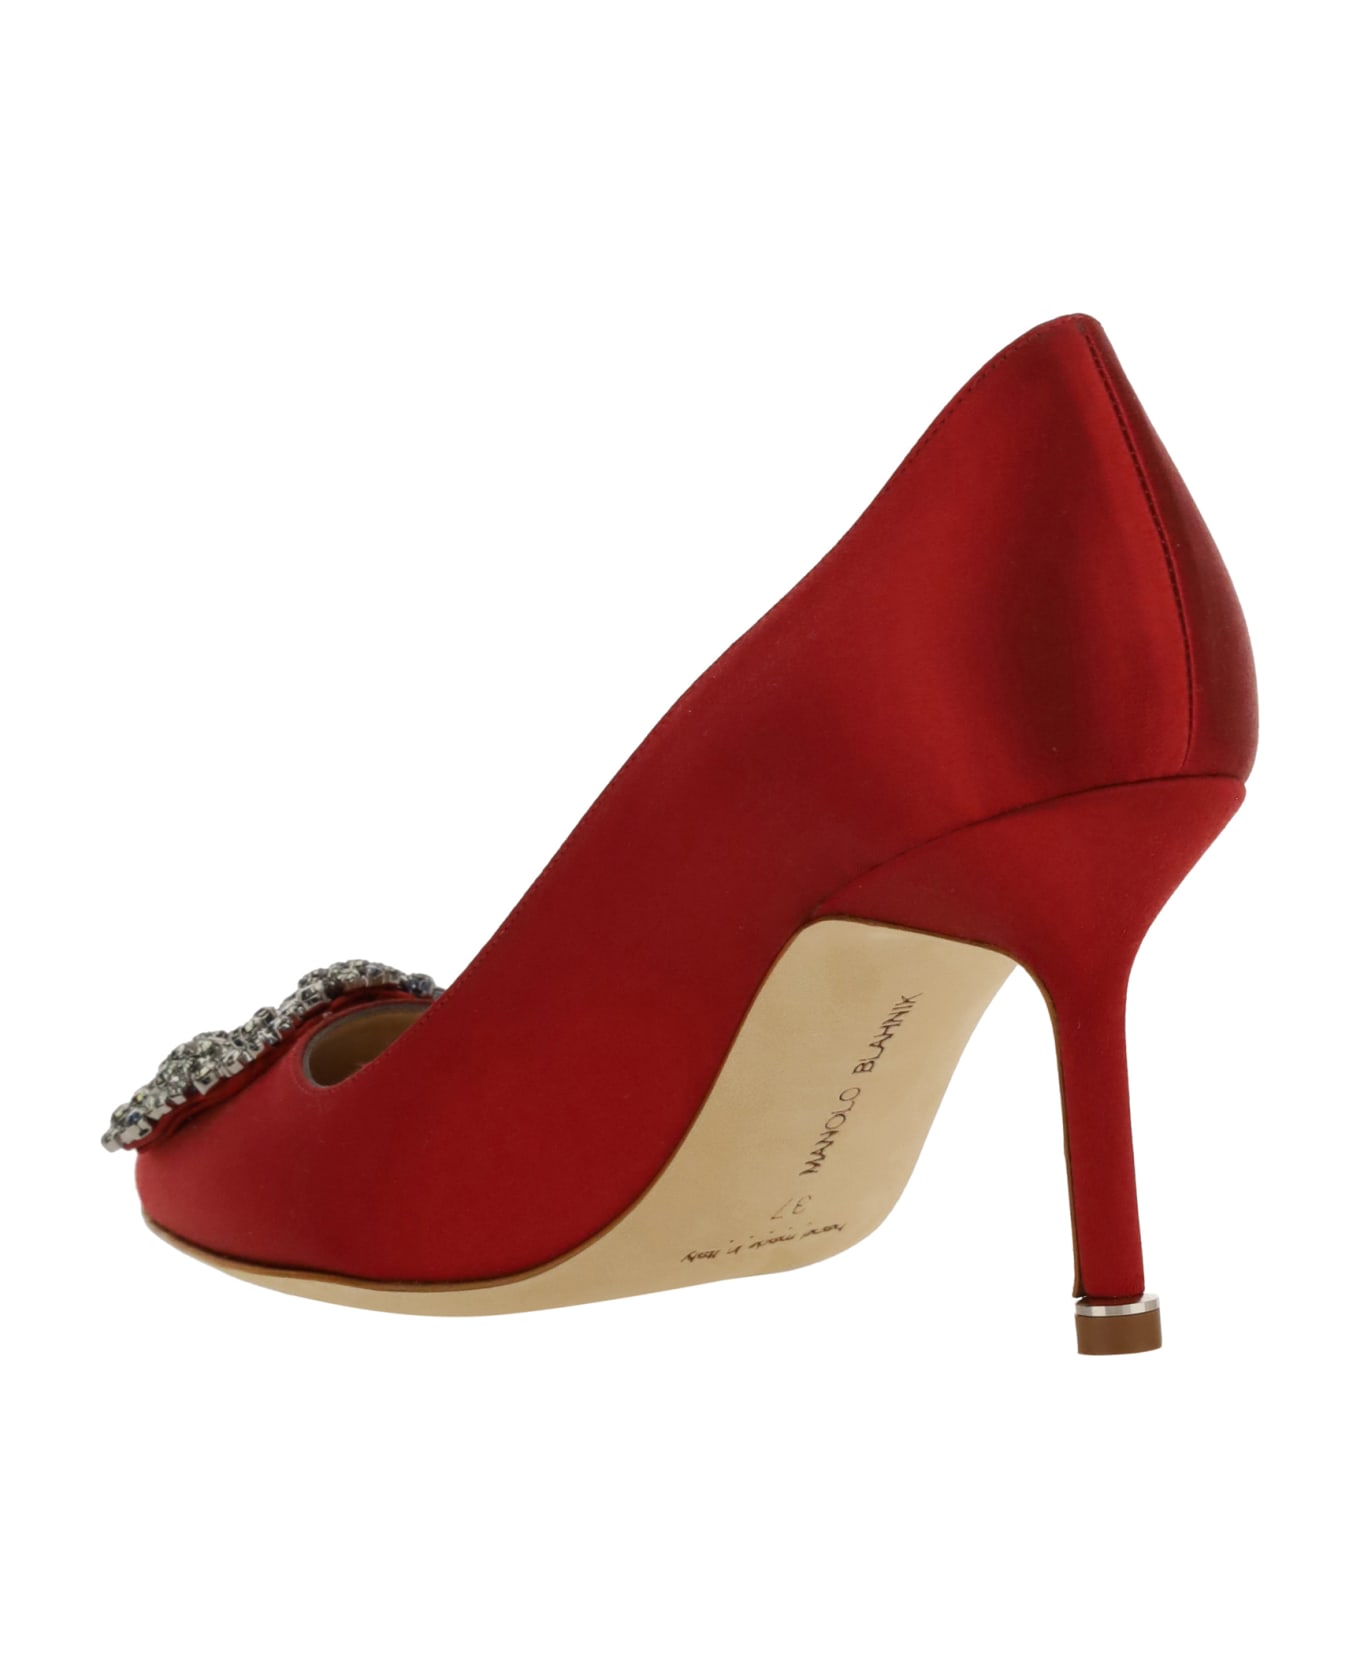 Manolo Blahnik Hangisi Sandalss - Red